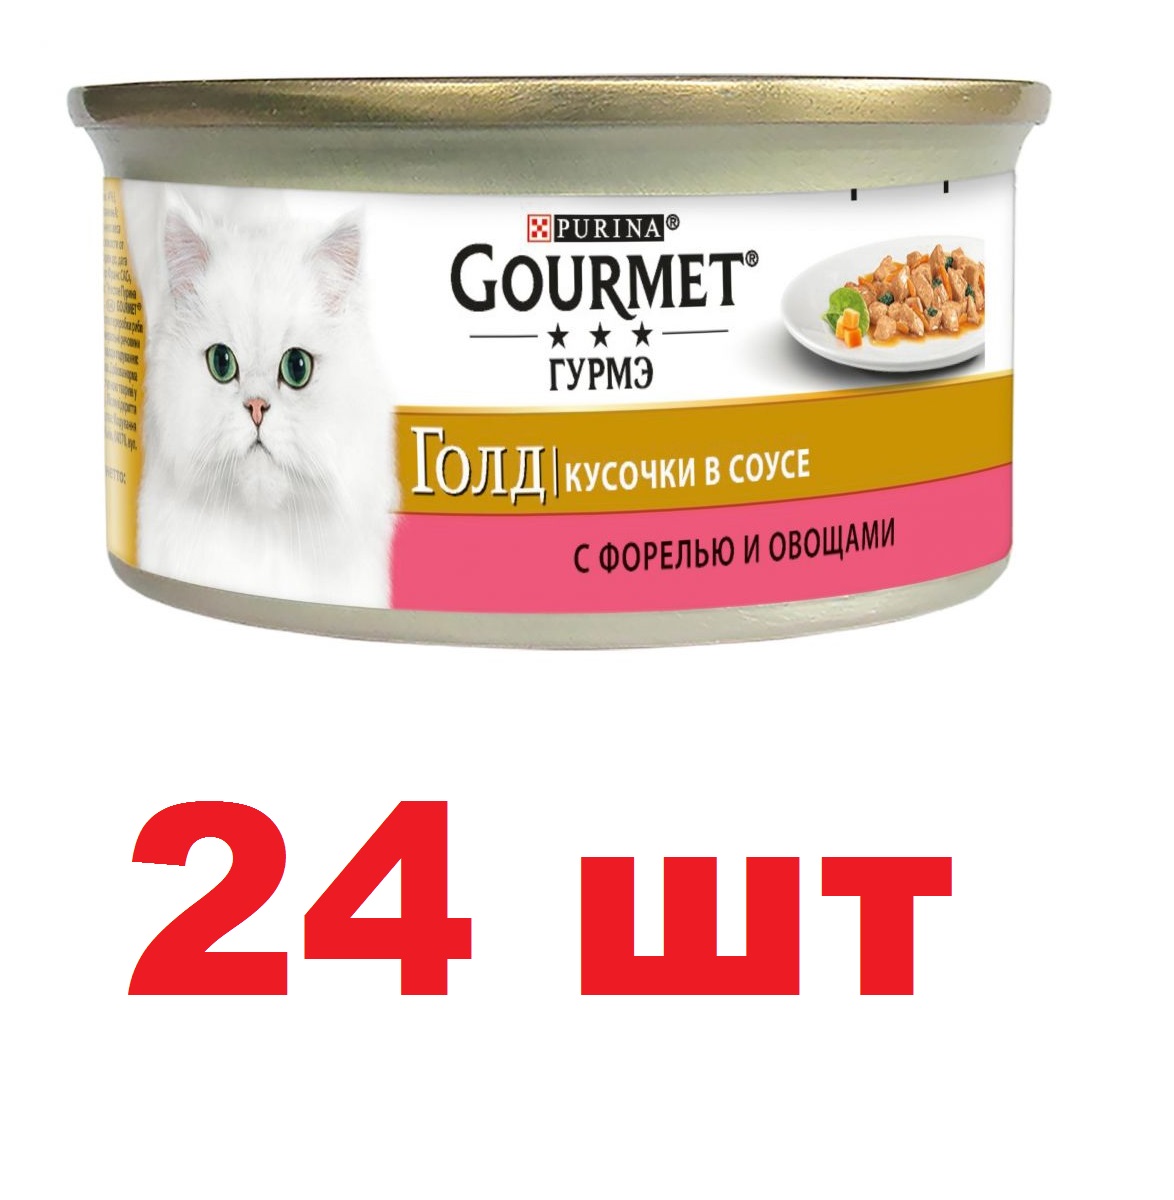 Гурме Голд 85гр - Форель/Овощи, кусочки в соусе (Gourmet)  1кор = 24шт